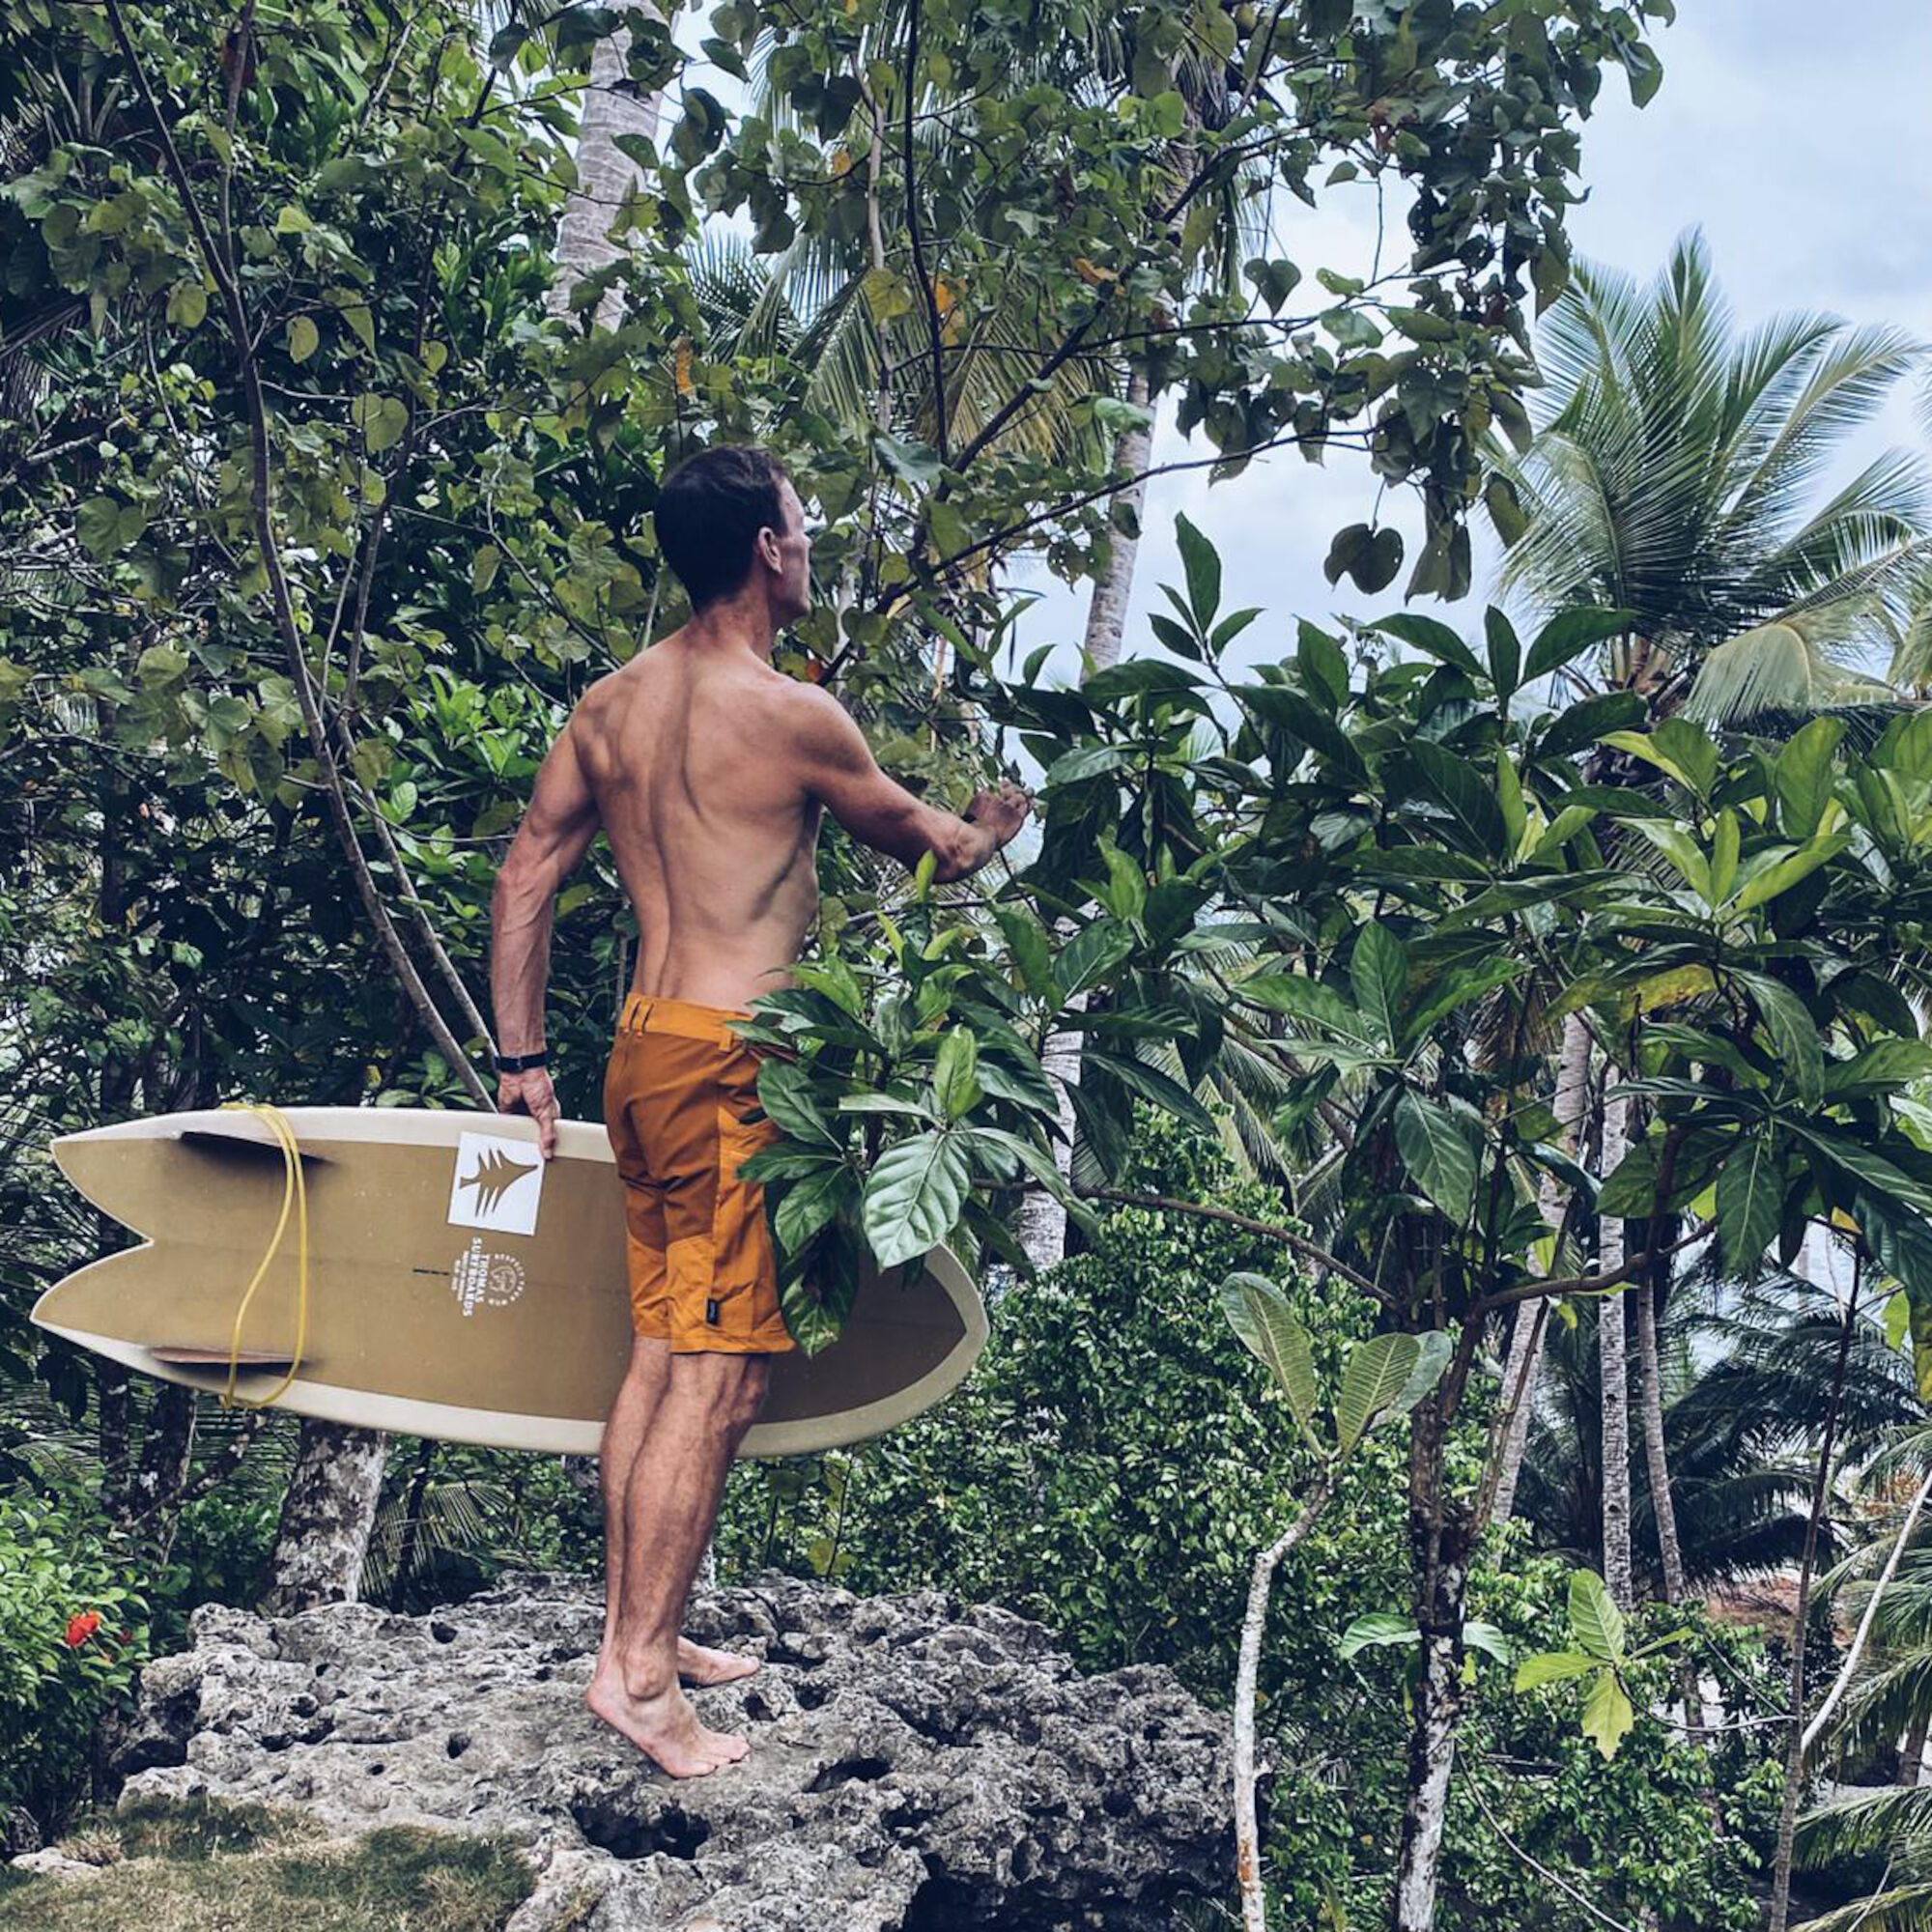 A man carrying a surfboard.